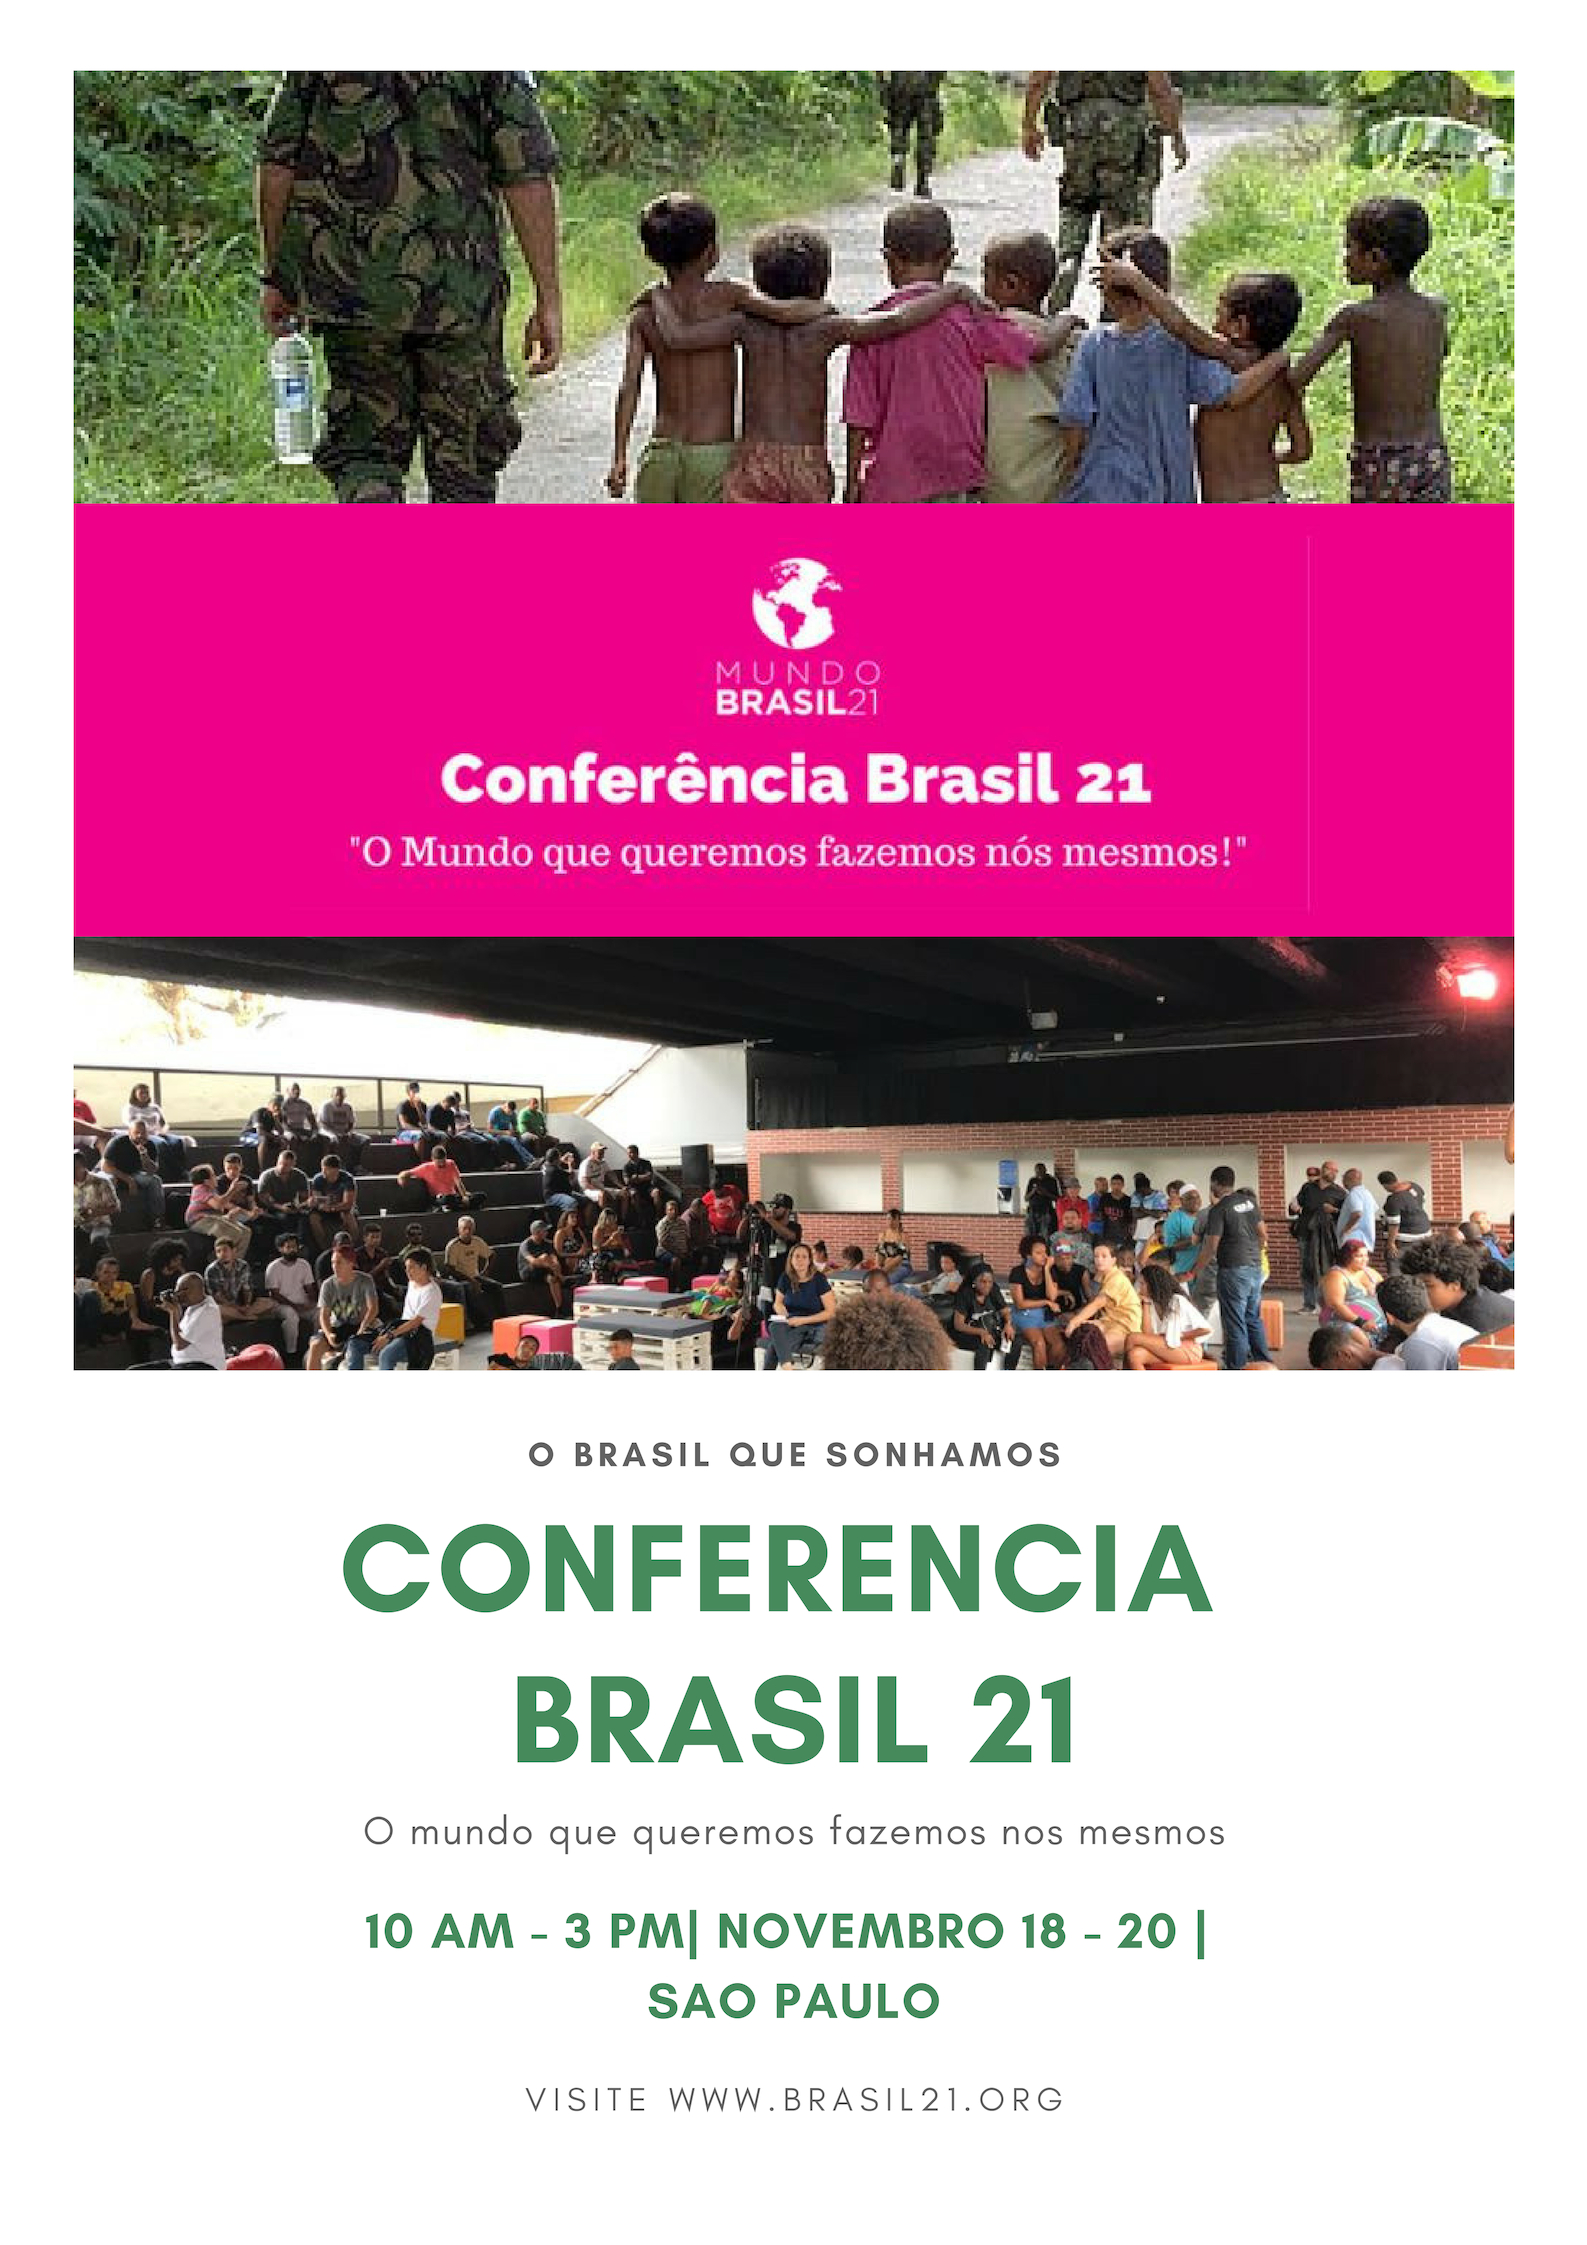 Brasil 21 – Lancamento Nacional: Primeira Conferencia de Economia de Mercado com Justiça Social. CSVM - Sao Paulo. 2018